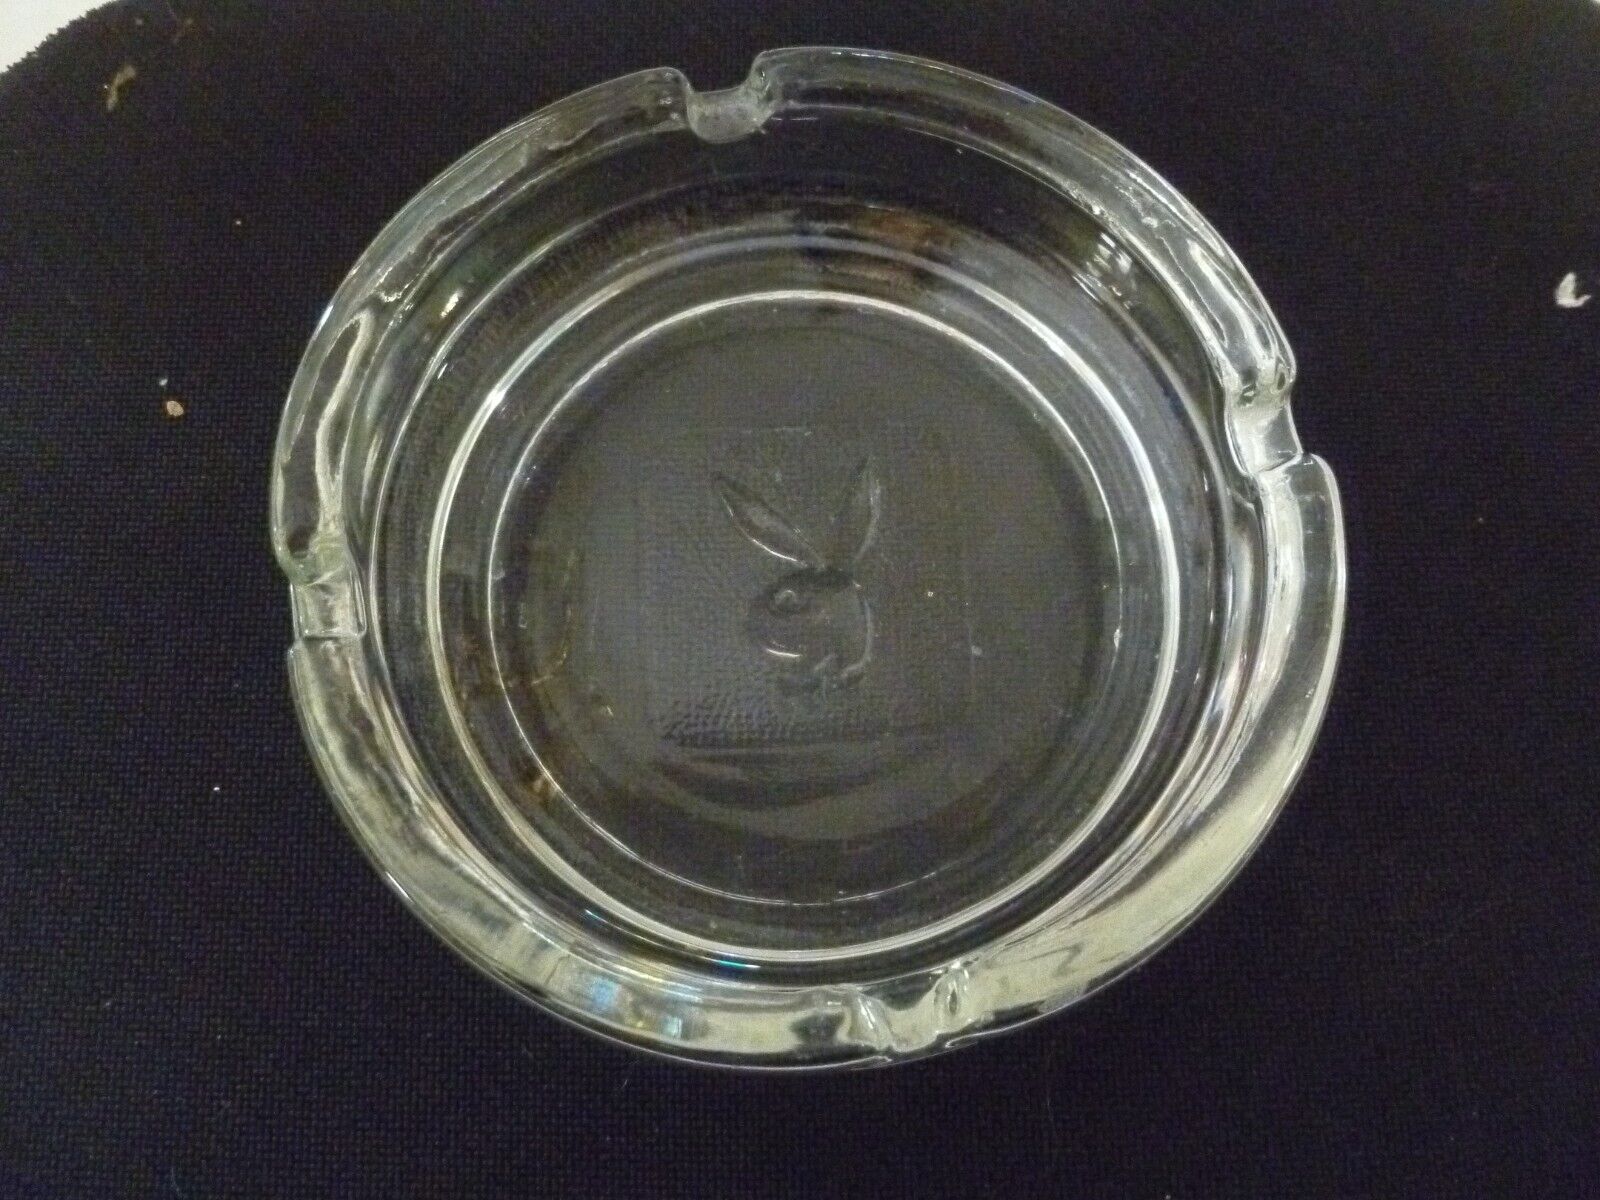 Playboy Bunny clear glass ashtray 4 inch